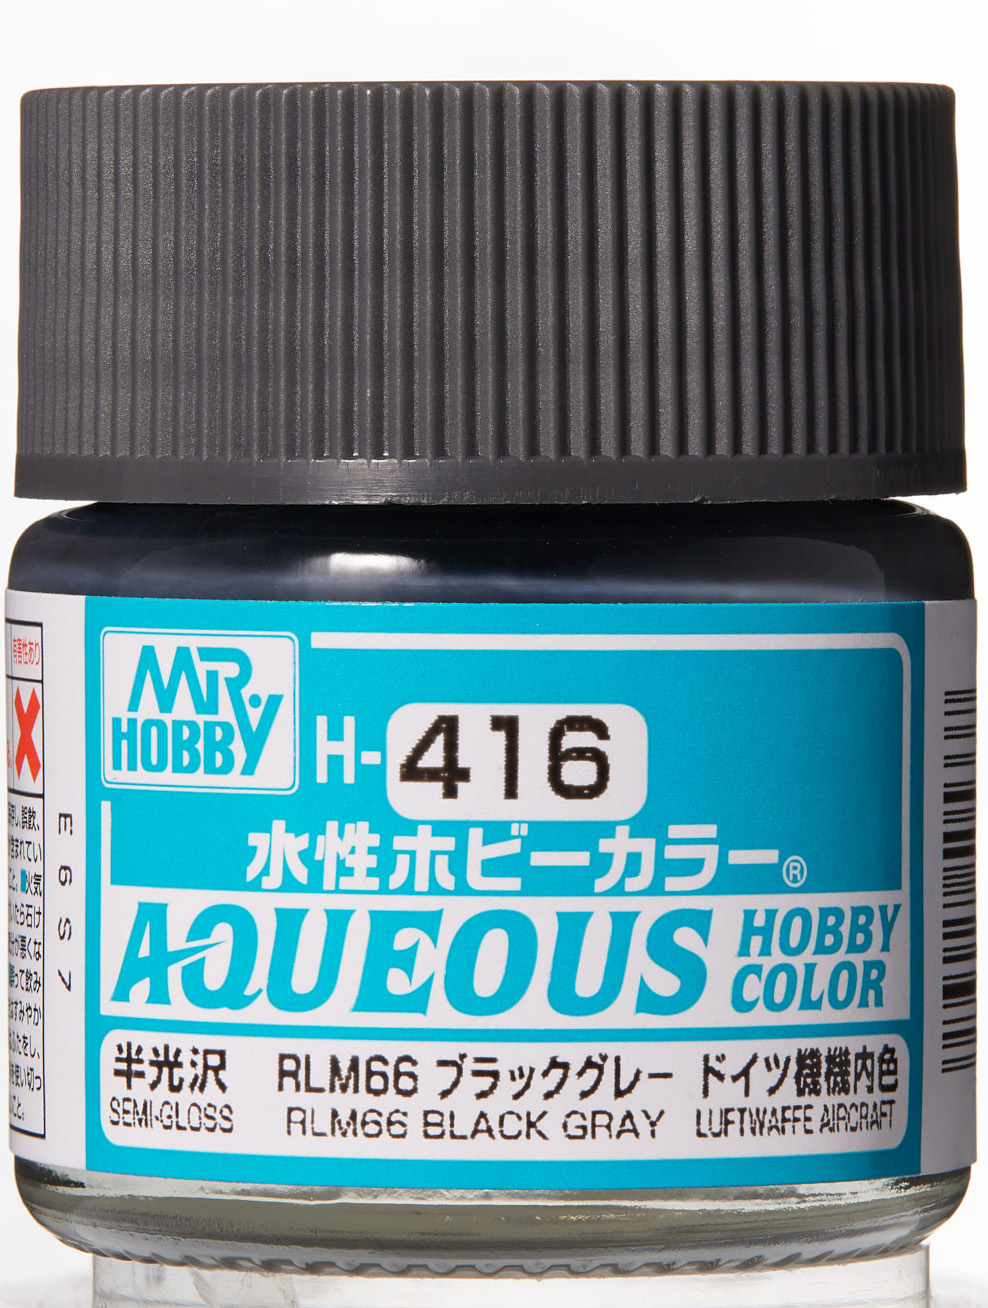 Mr. Aqueous Hobby Color - RLM66 Black Gray - H416 - RLM66 Schwarzgrau